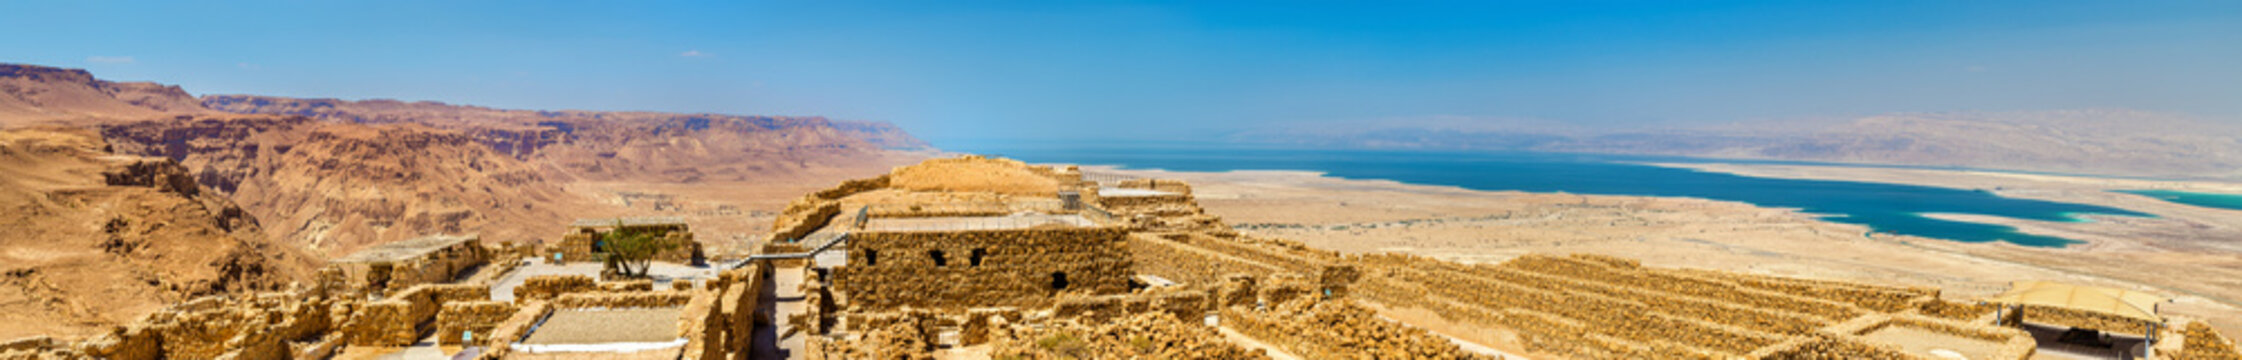 Ruins of Masada fortress and Dead Sea